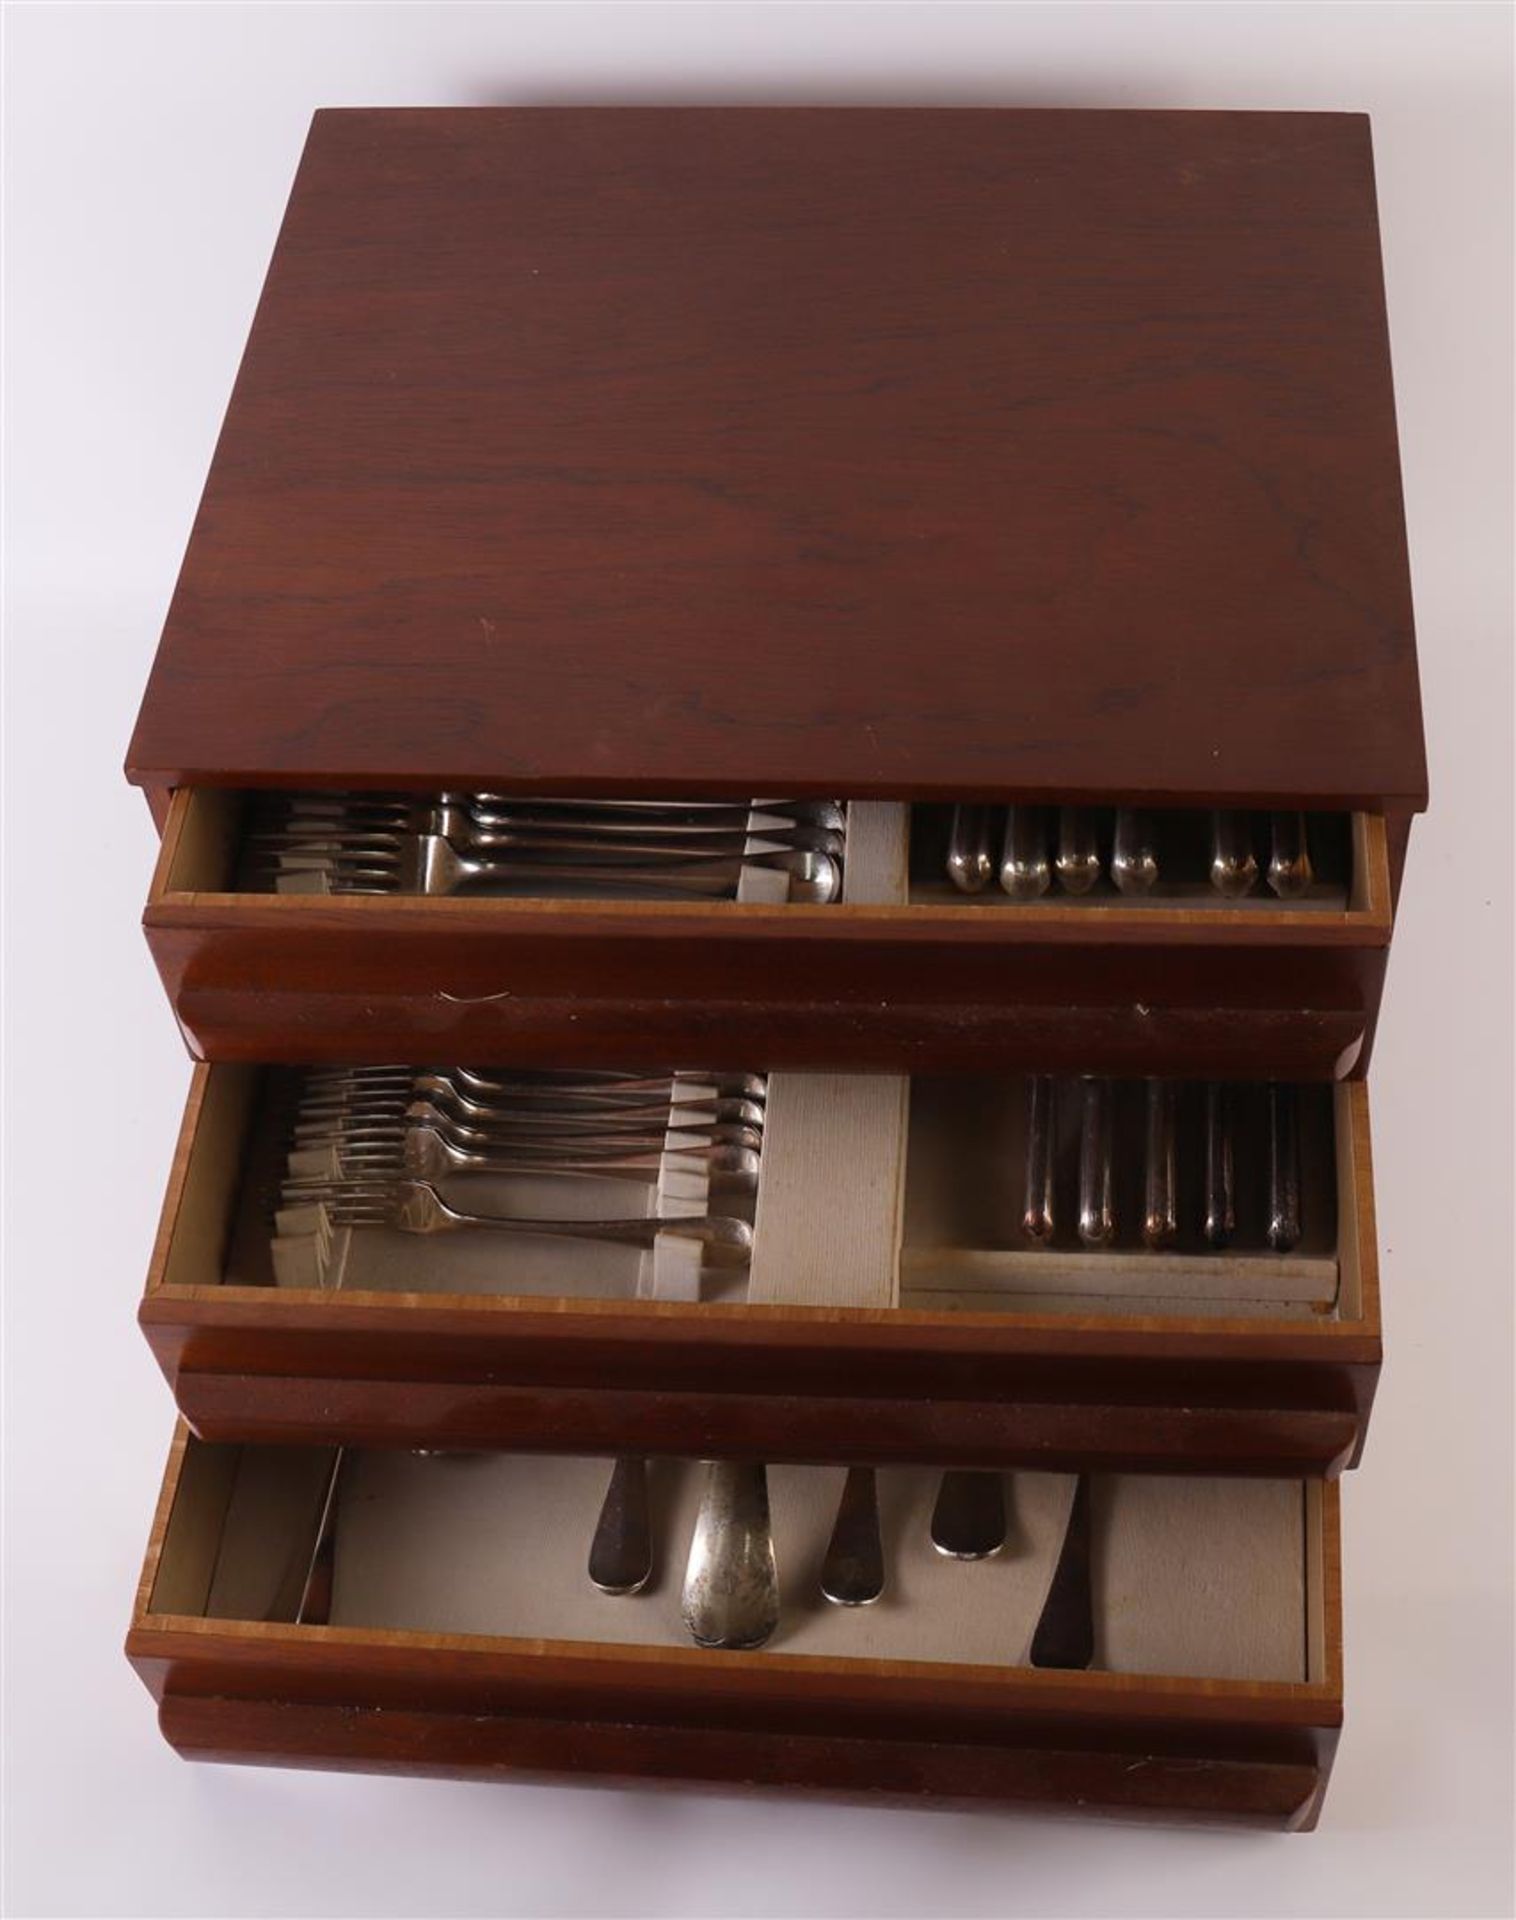 A silver-plated Keltum cutlery in cassette, 20th century.